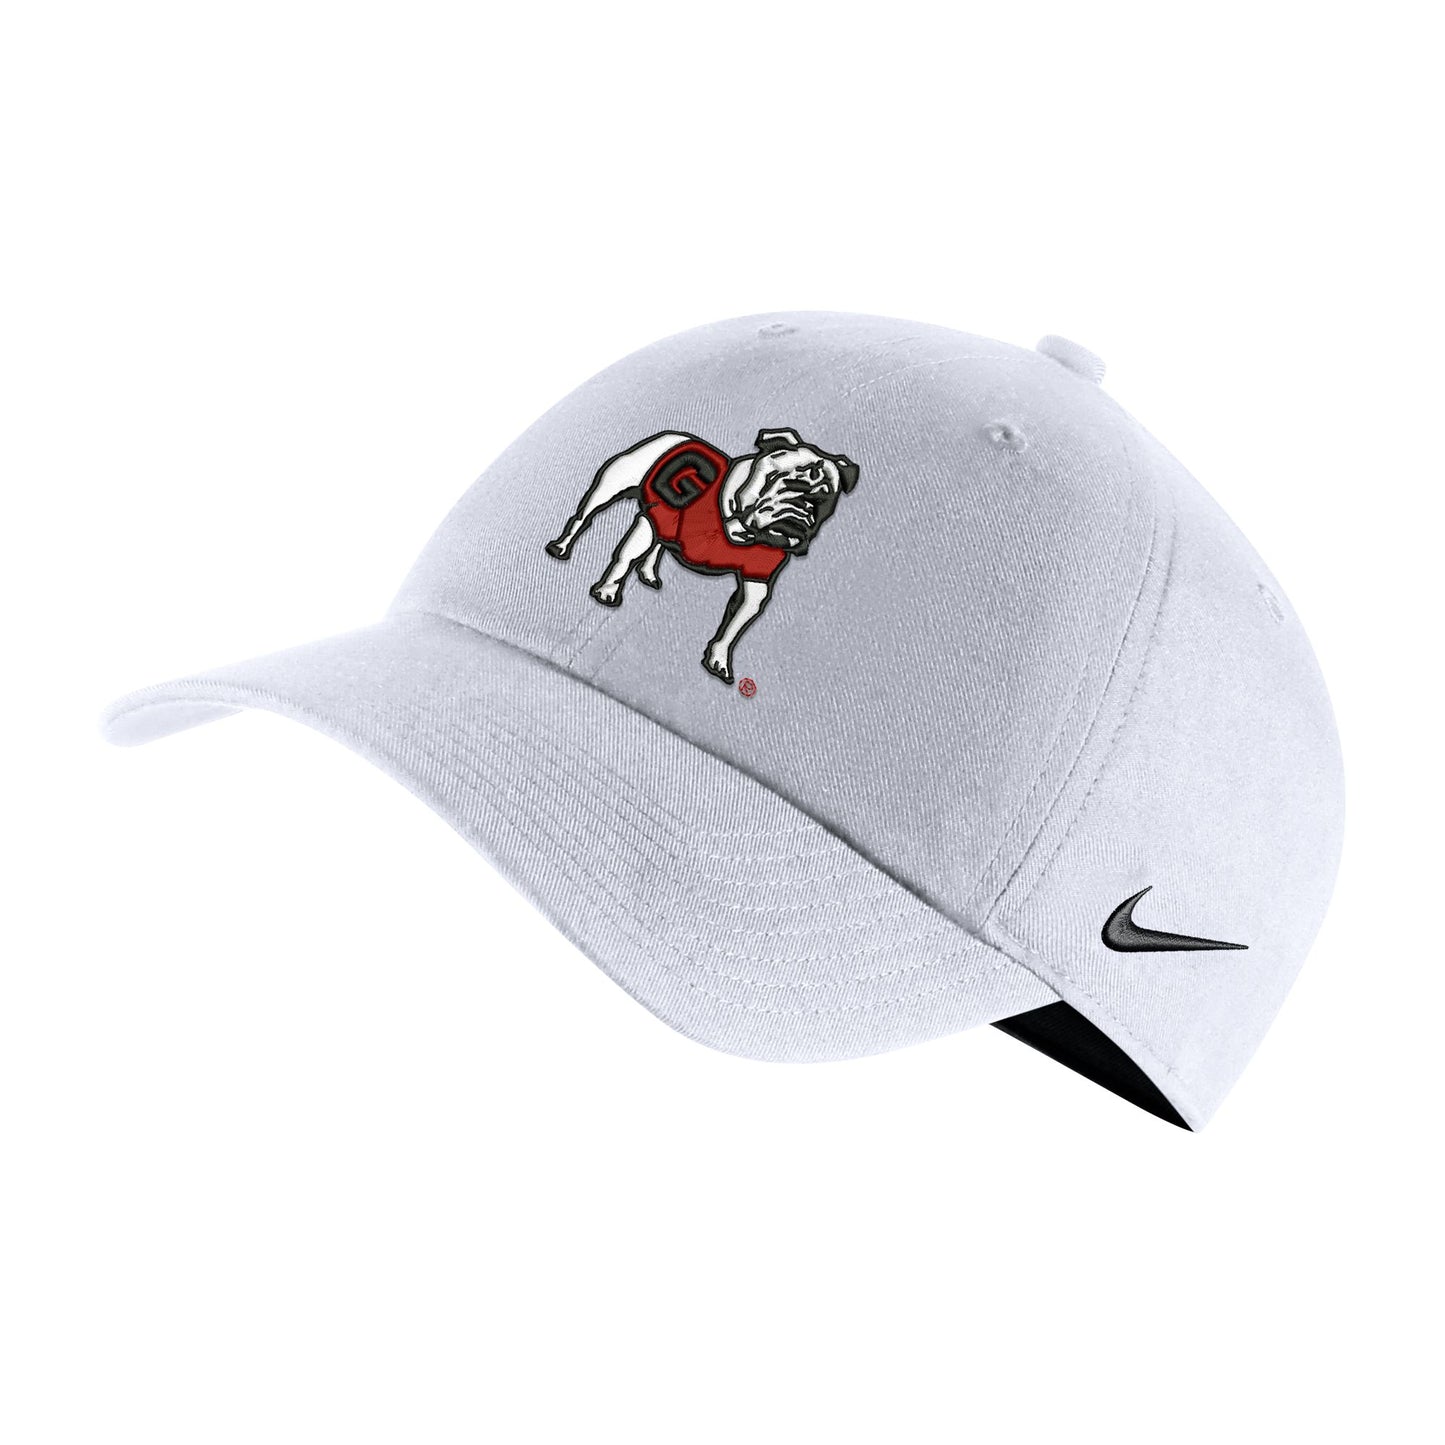 UGA Nike Red Heritage 86 Hat with Standing Bulldog